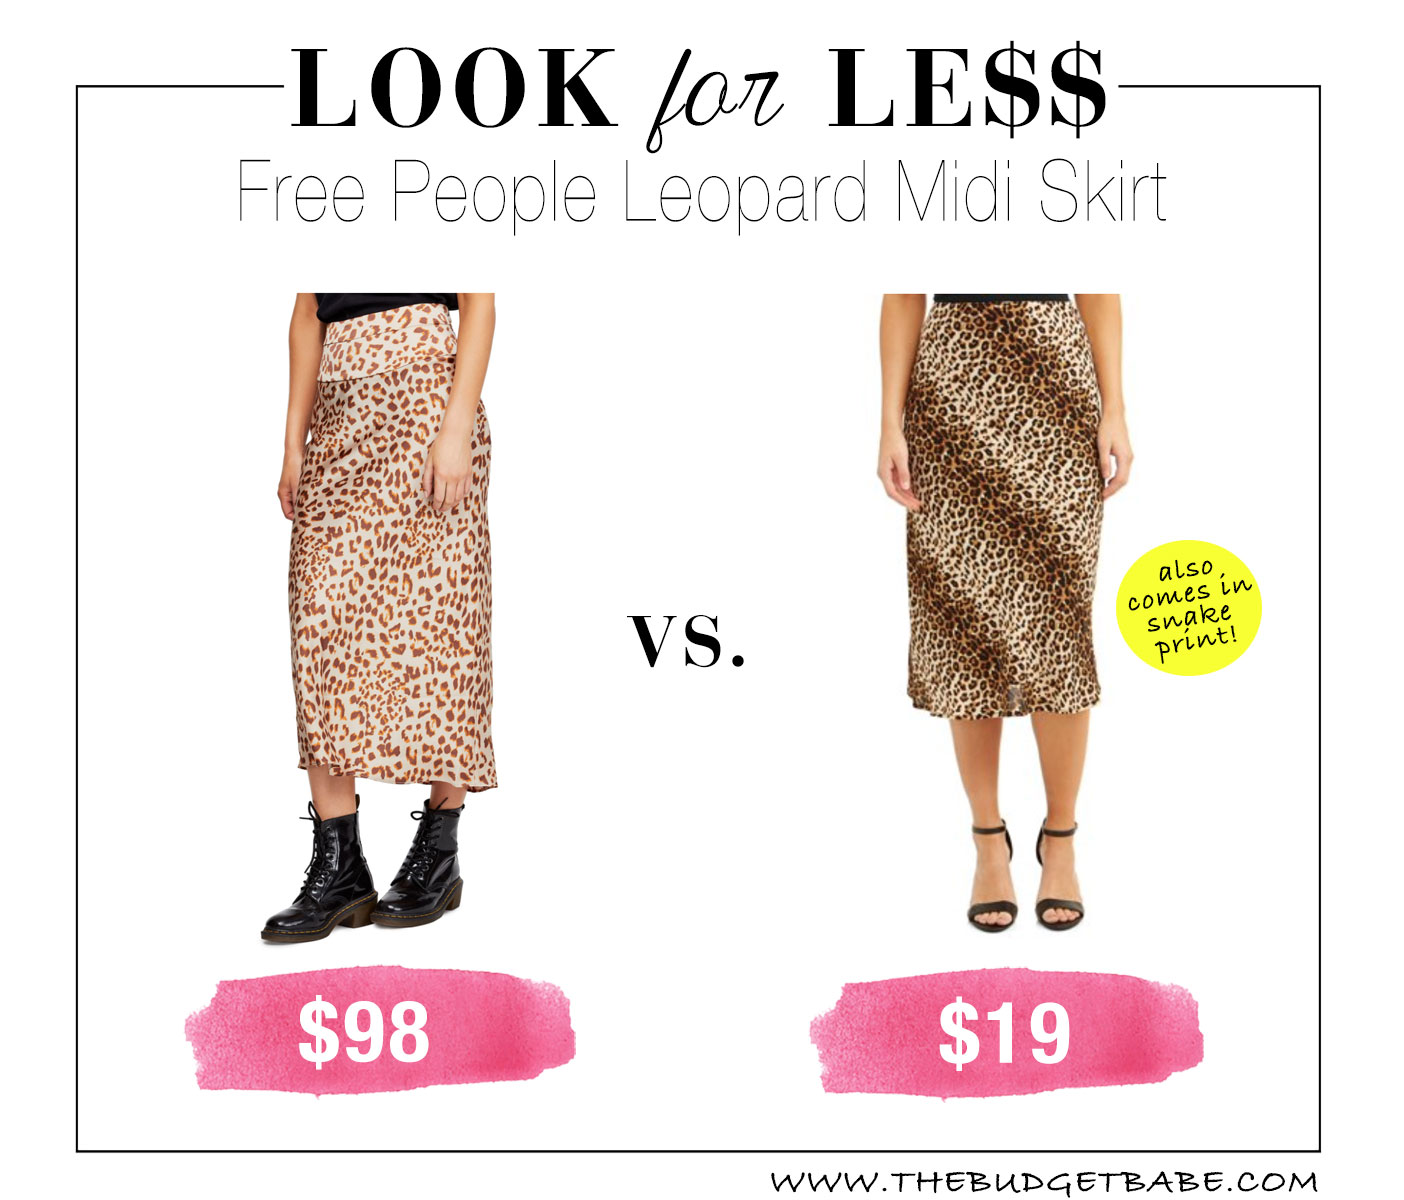 Leopard skirt under $20!